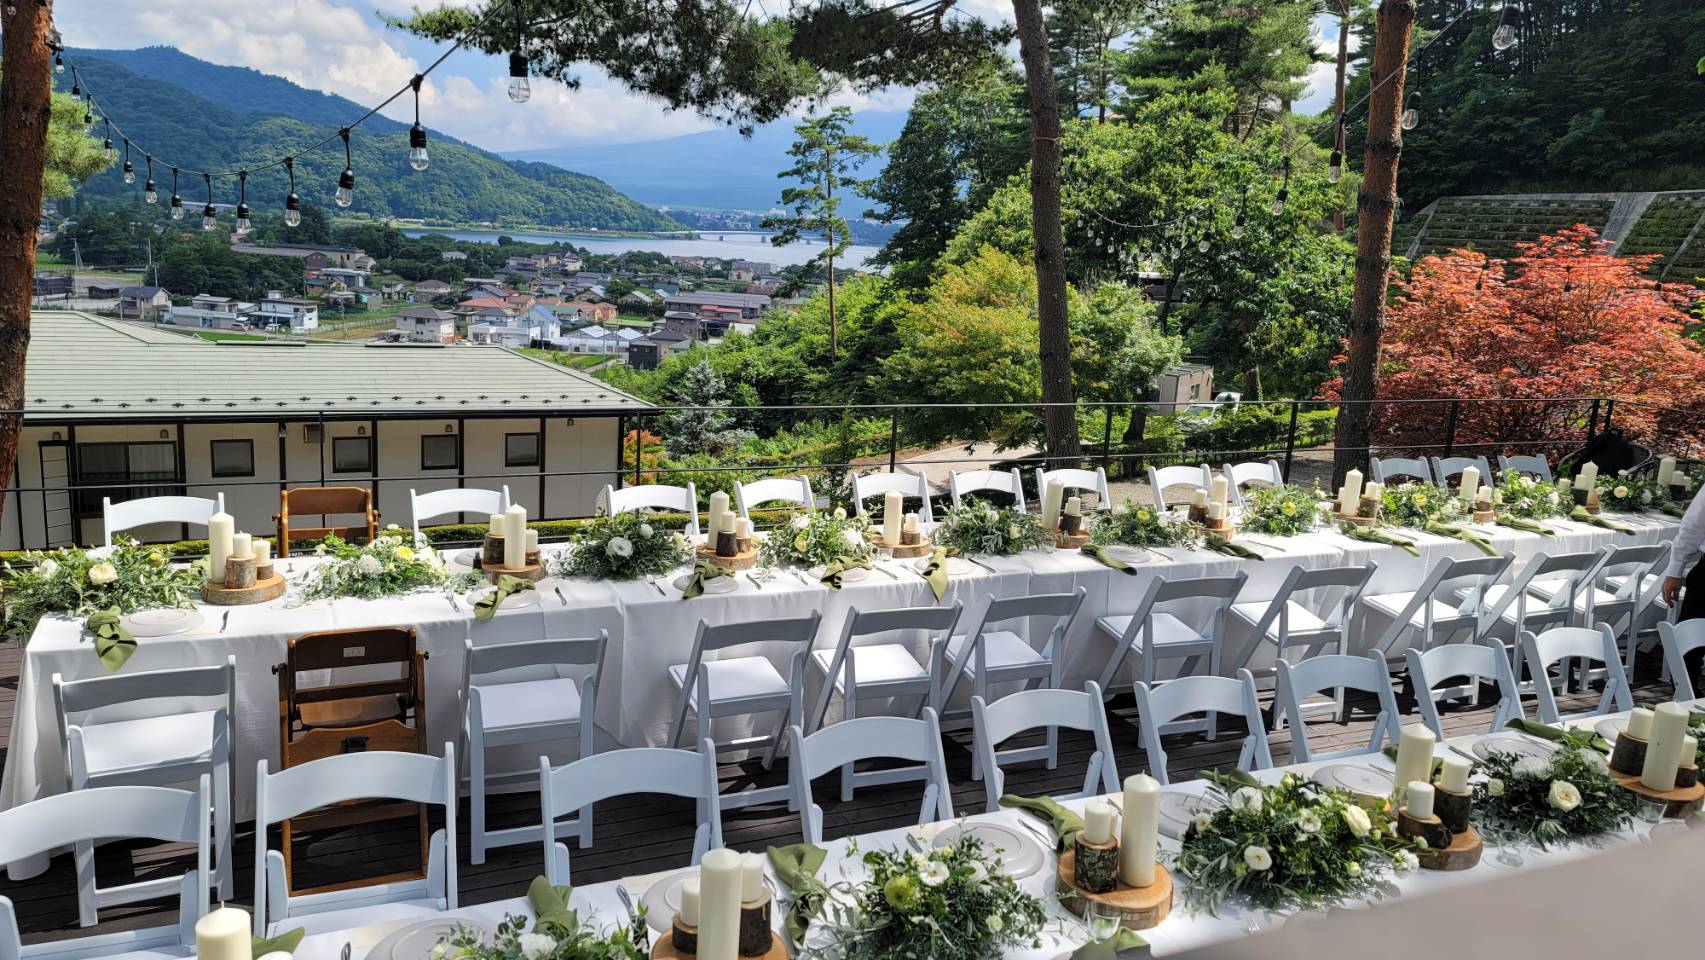 Cuore Wedding【Destination Weddings in Japan】